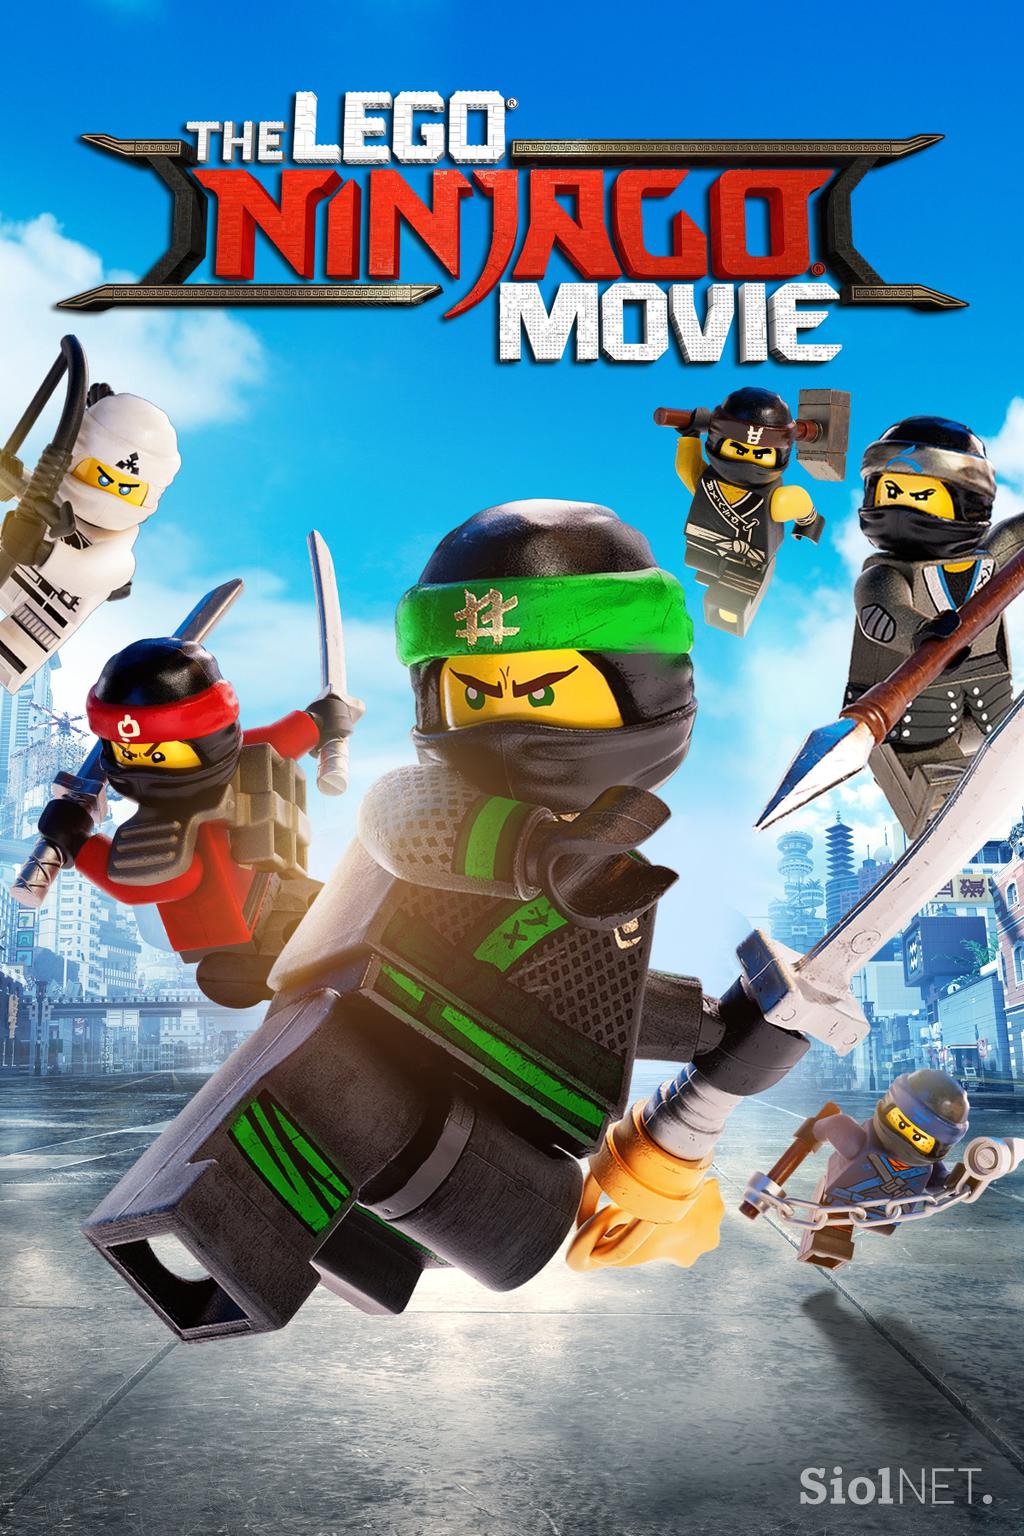 LEGO Ninjago Film (The Lego Ninjago Movie)